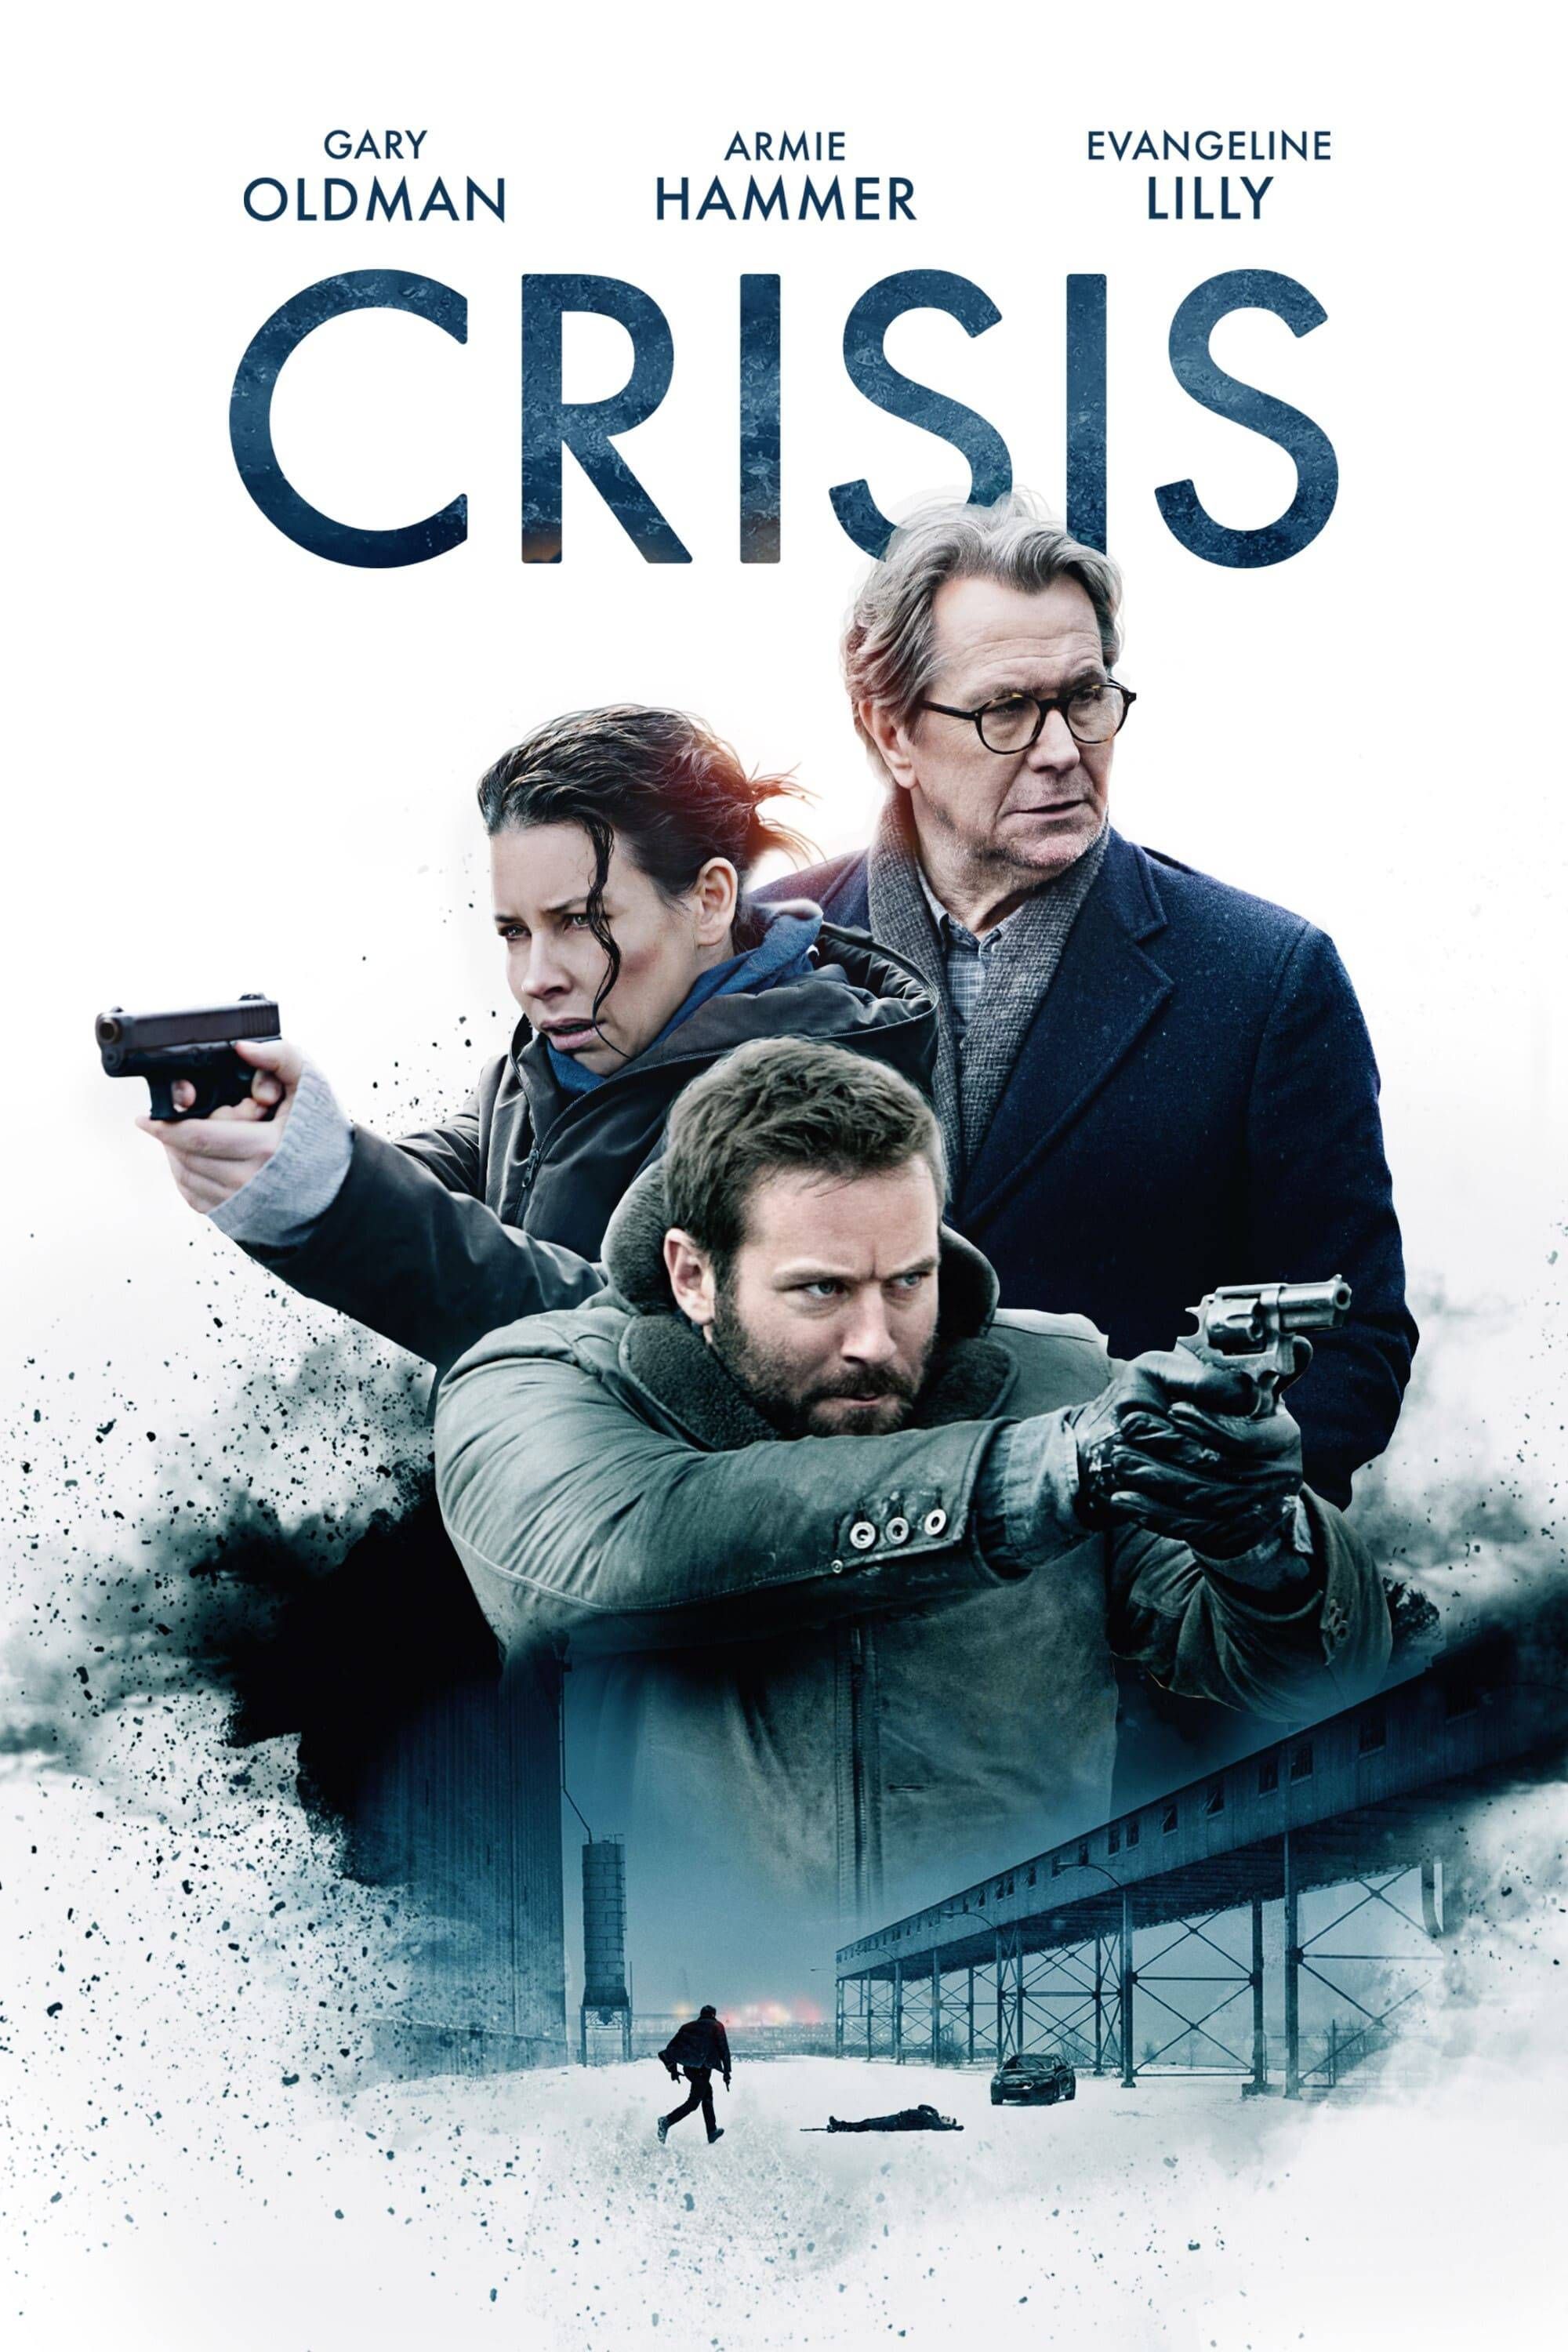 crisis poster